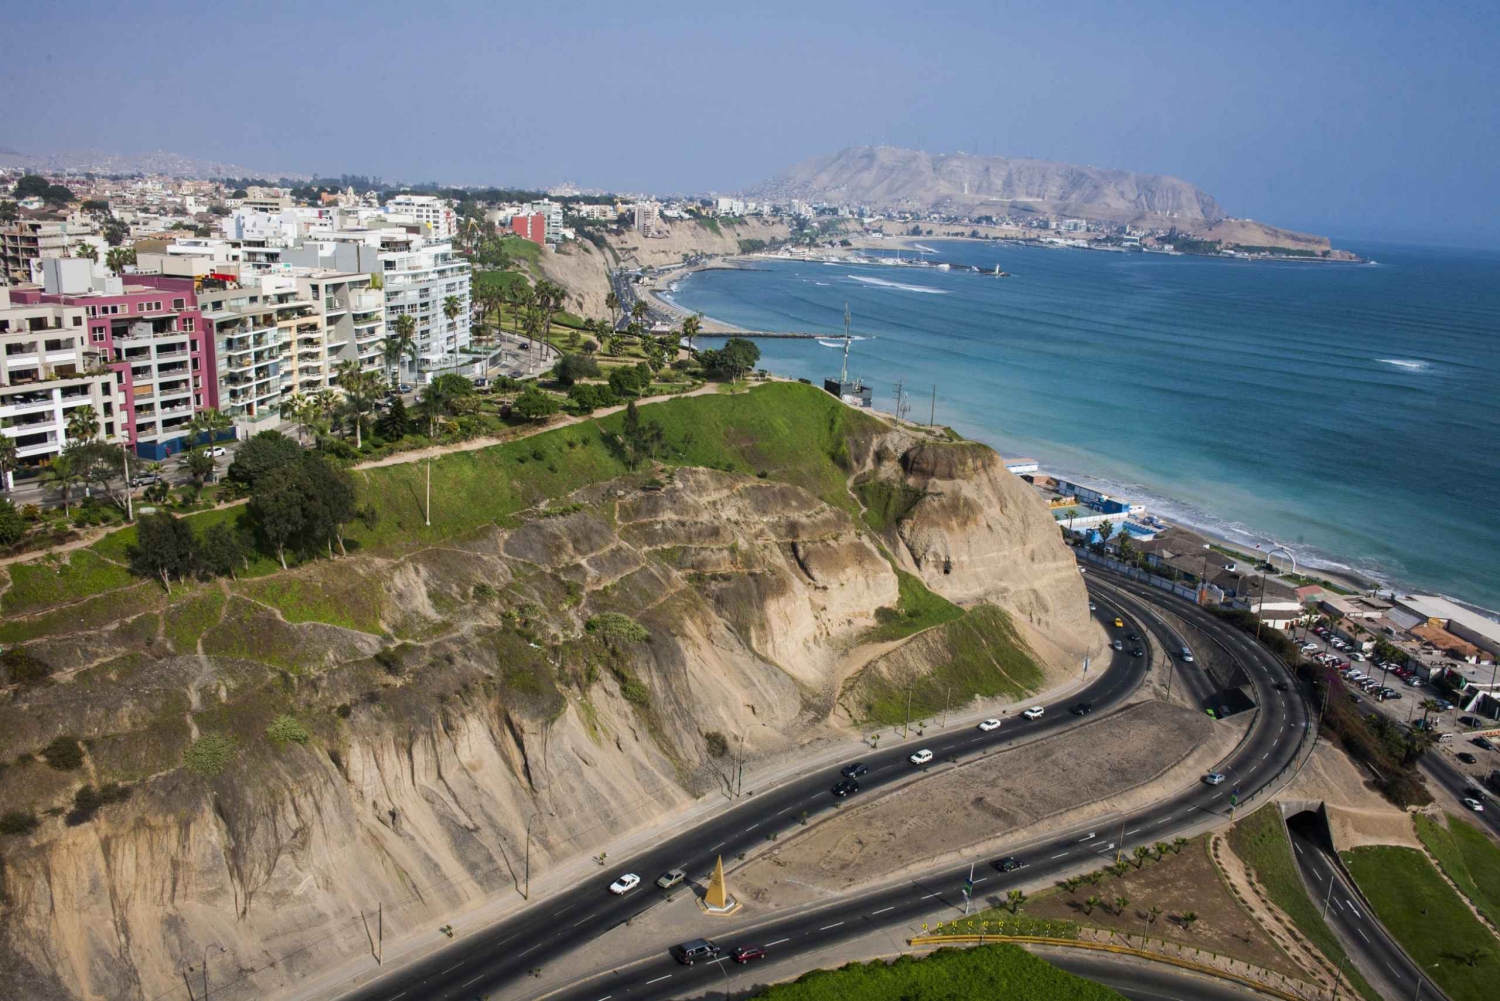 Lima: Barranco & Miraflores, Gastronomic Experience & Lunch